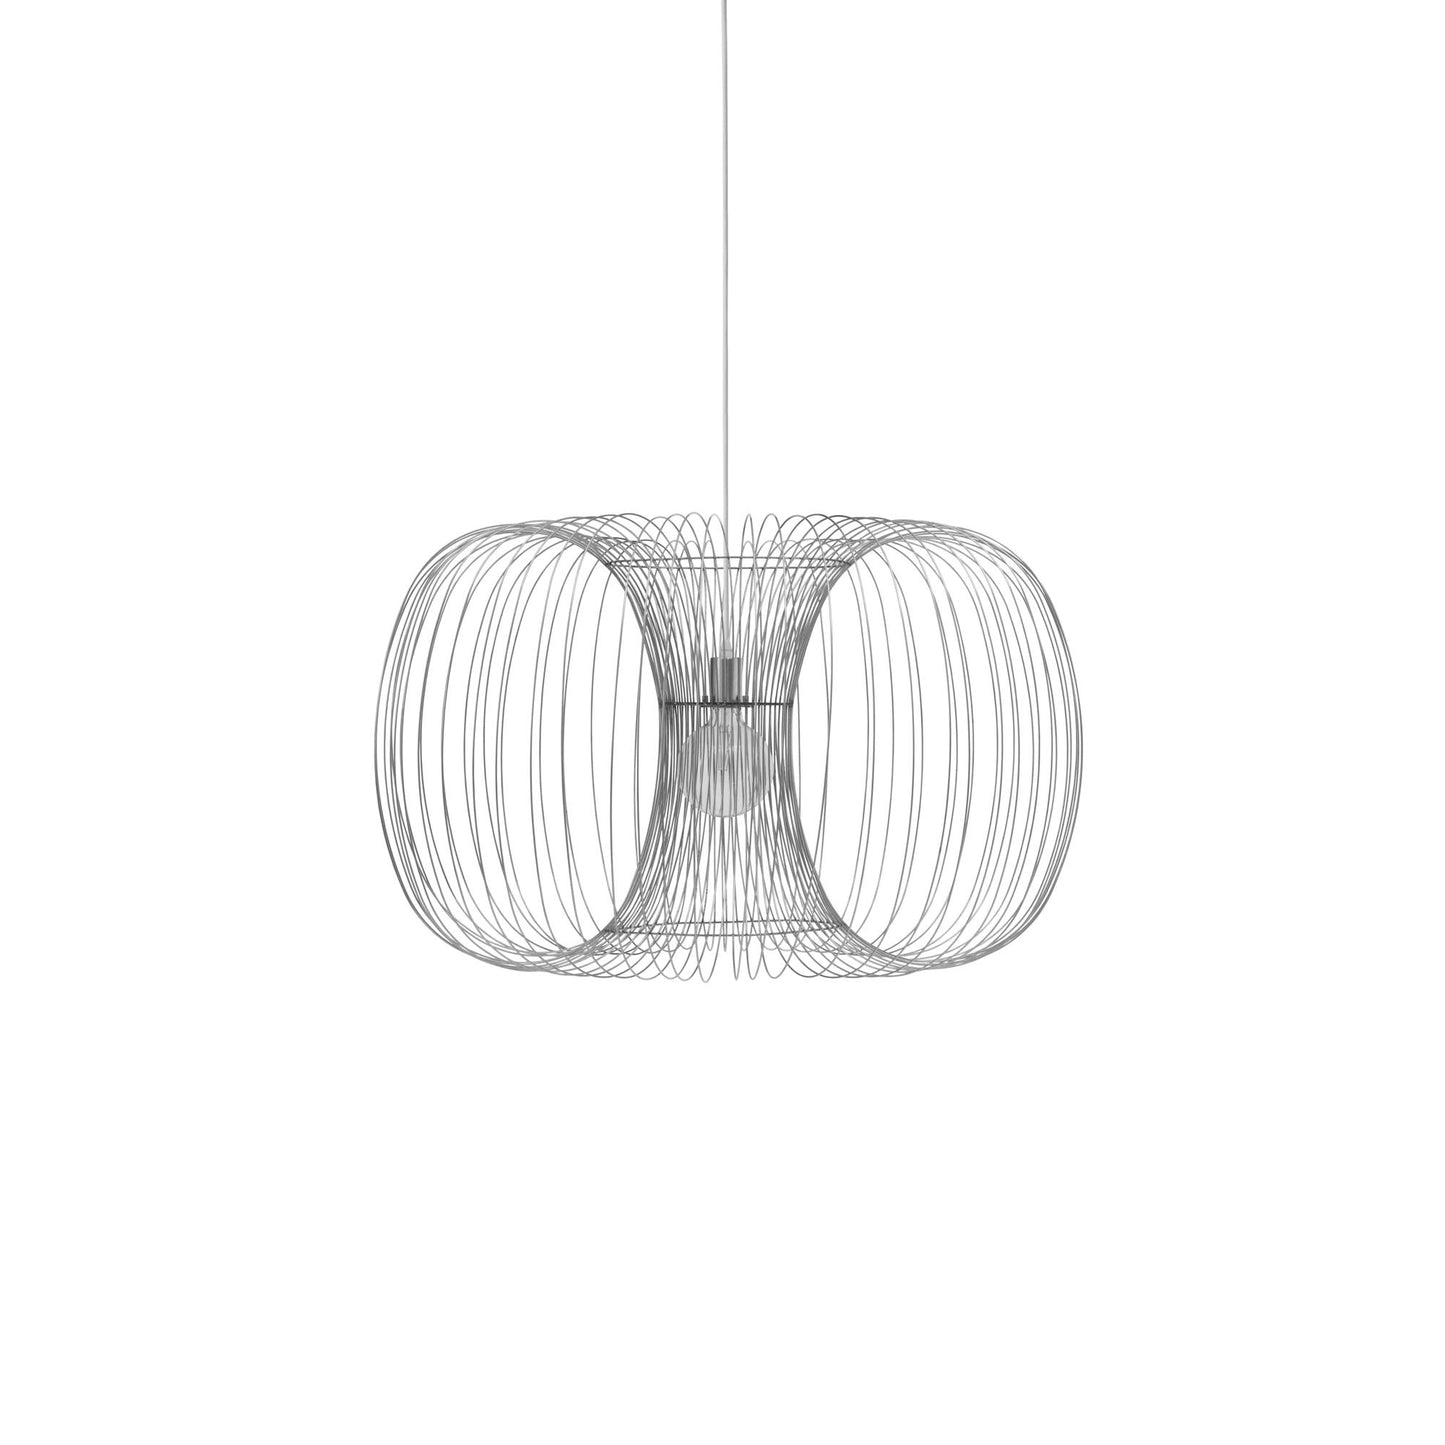 Coil Pendant Lamp Ø76 by Normann Copenhagen #Steel